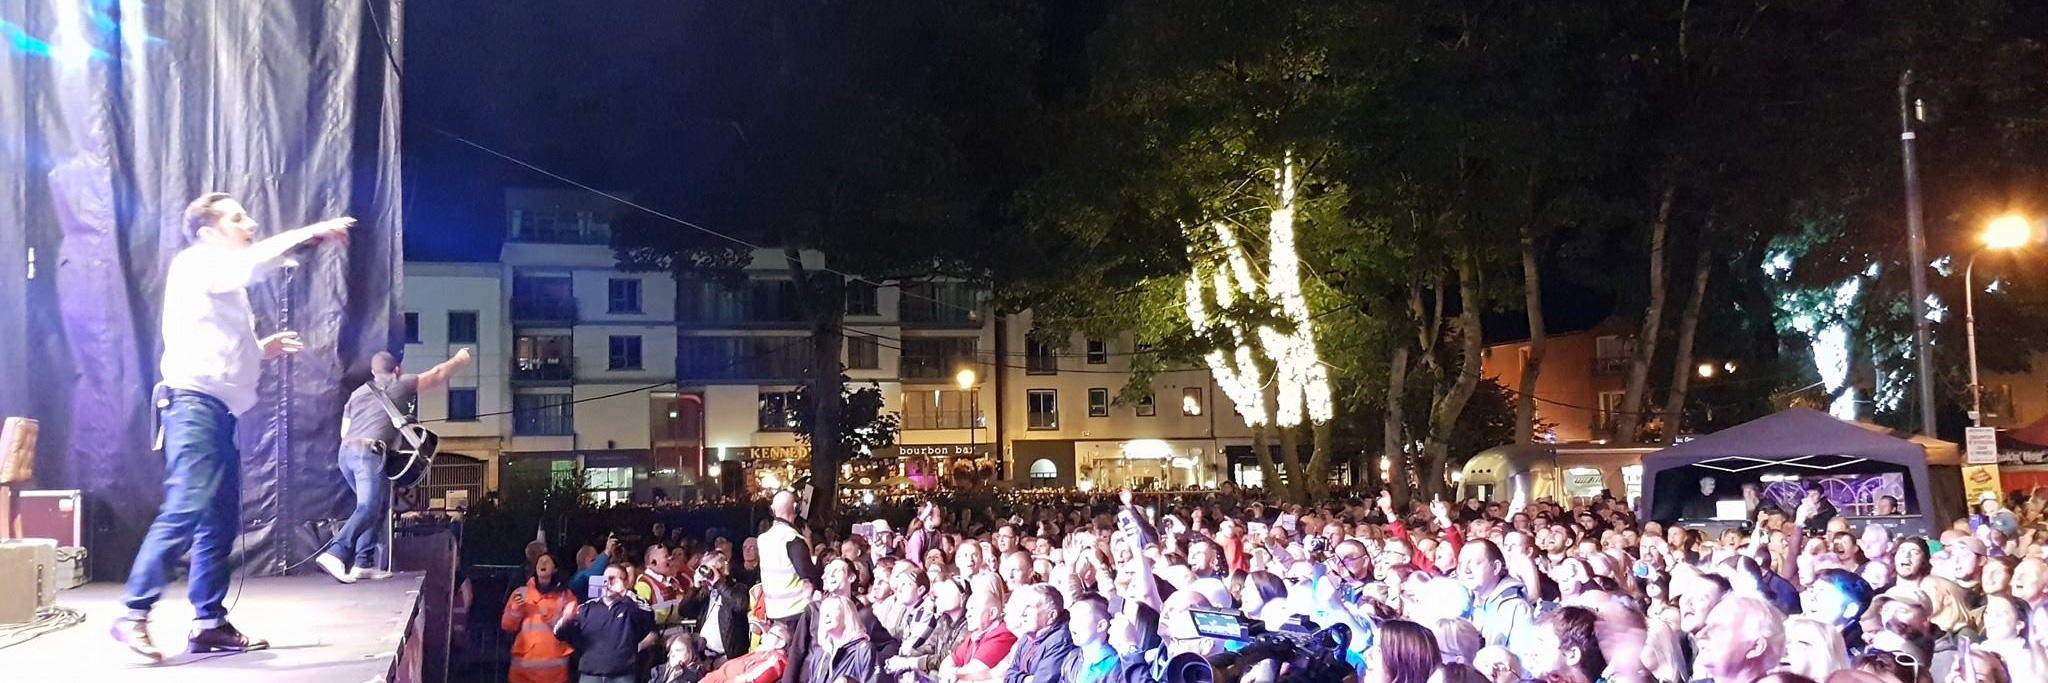 Four-day Sligo Summer Festival is going from strength to strength